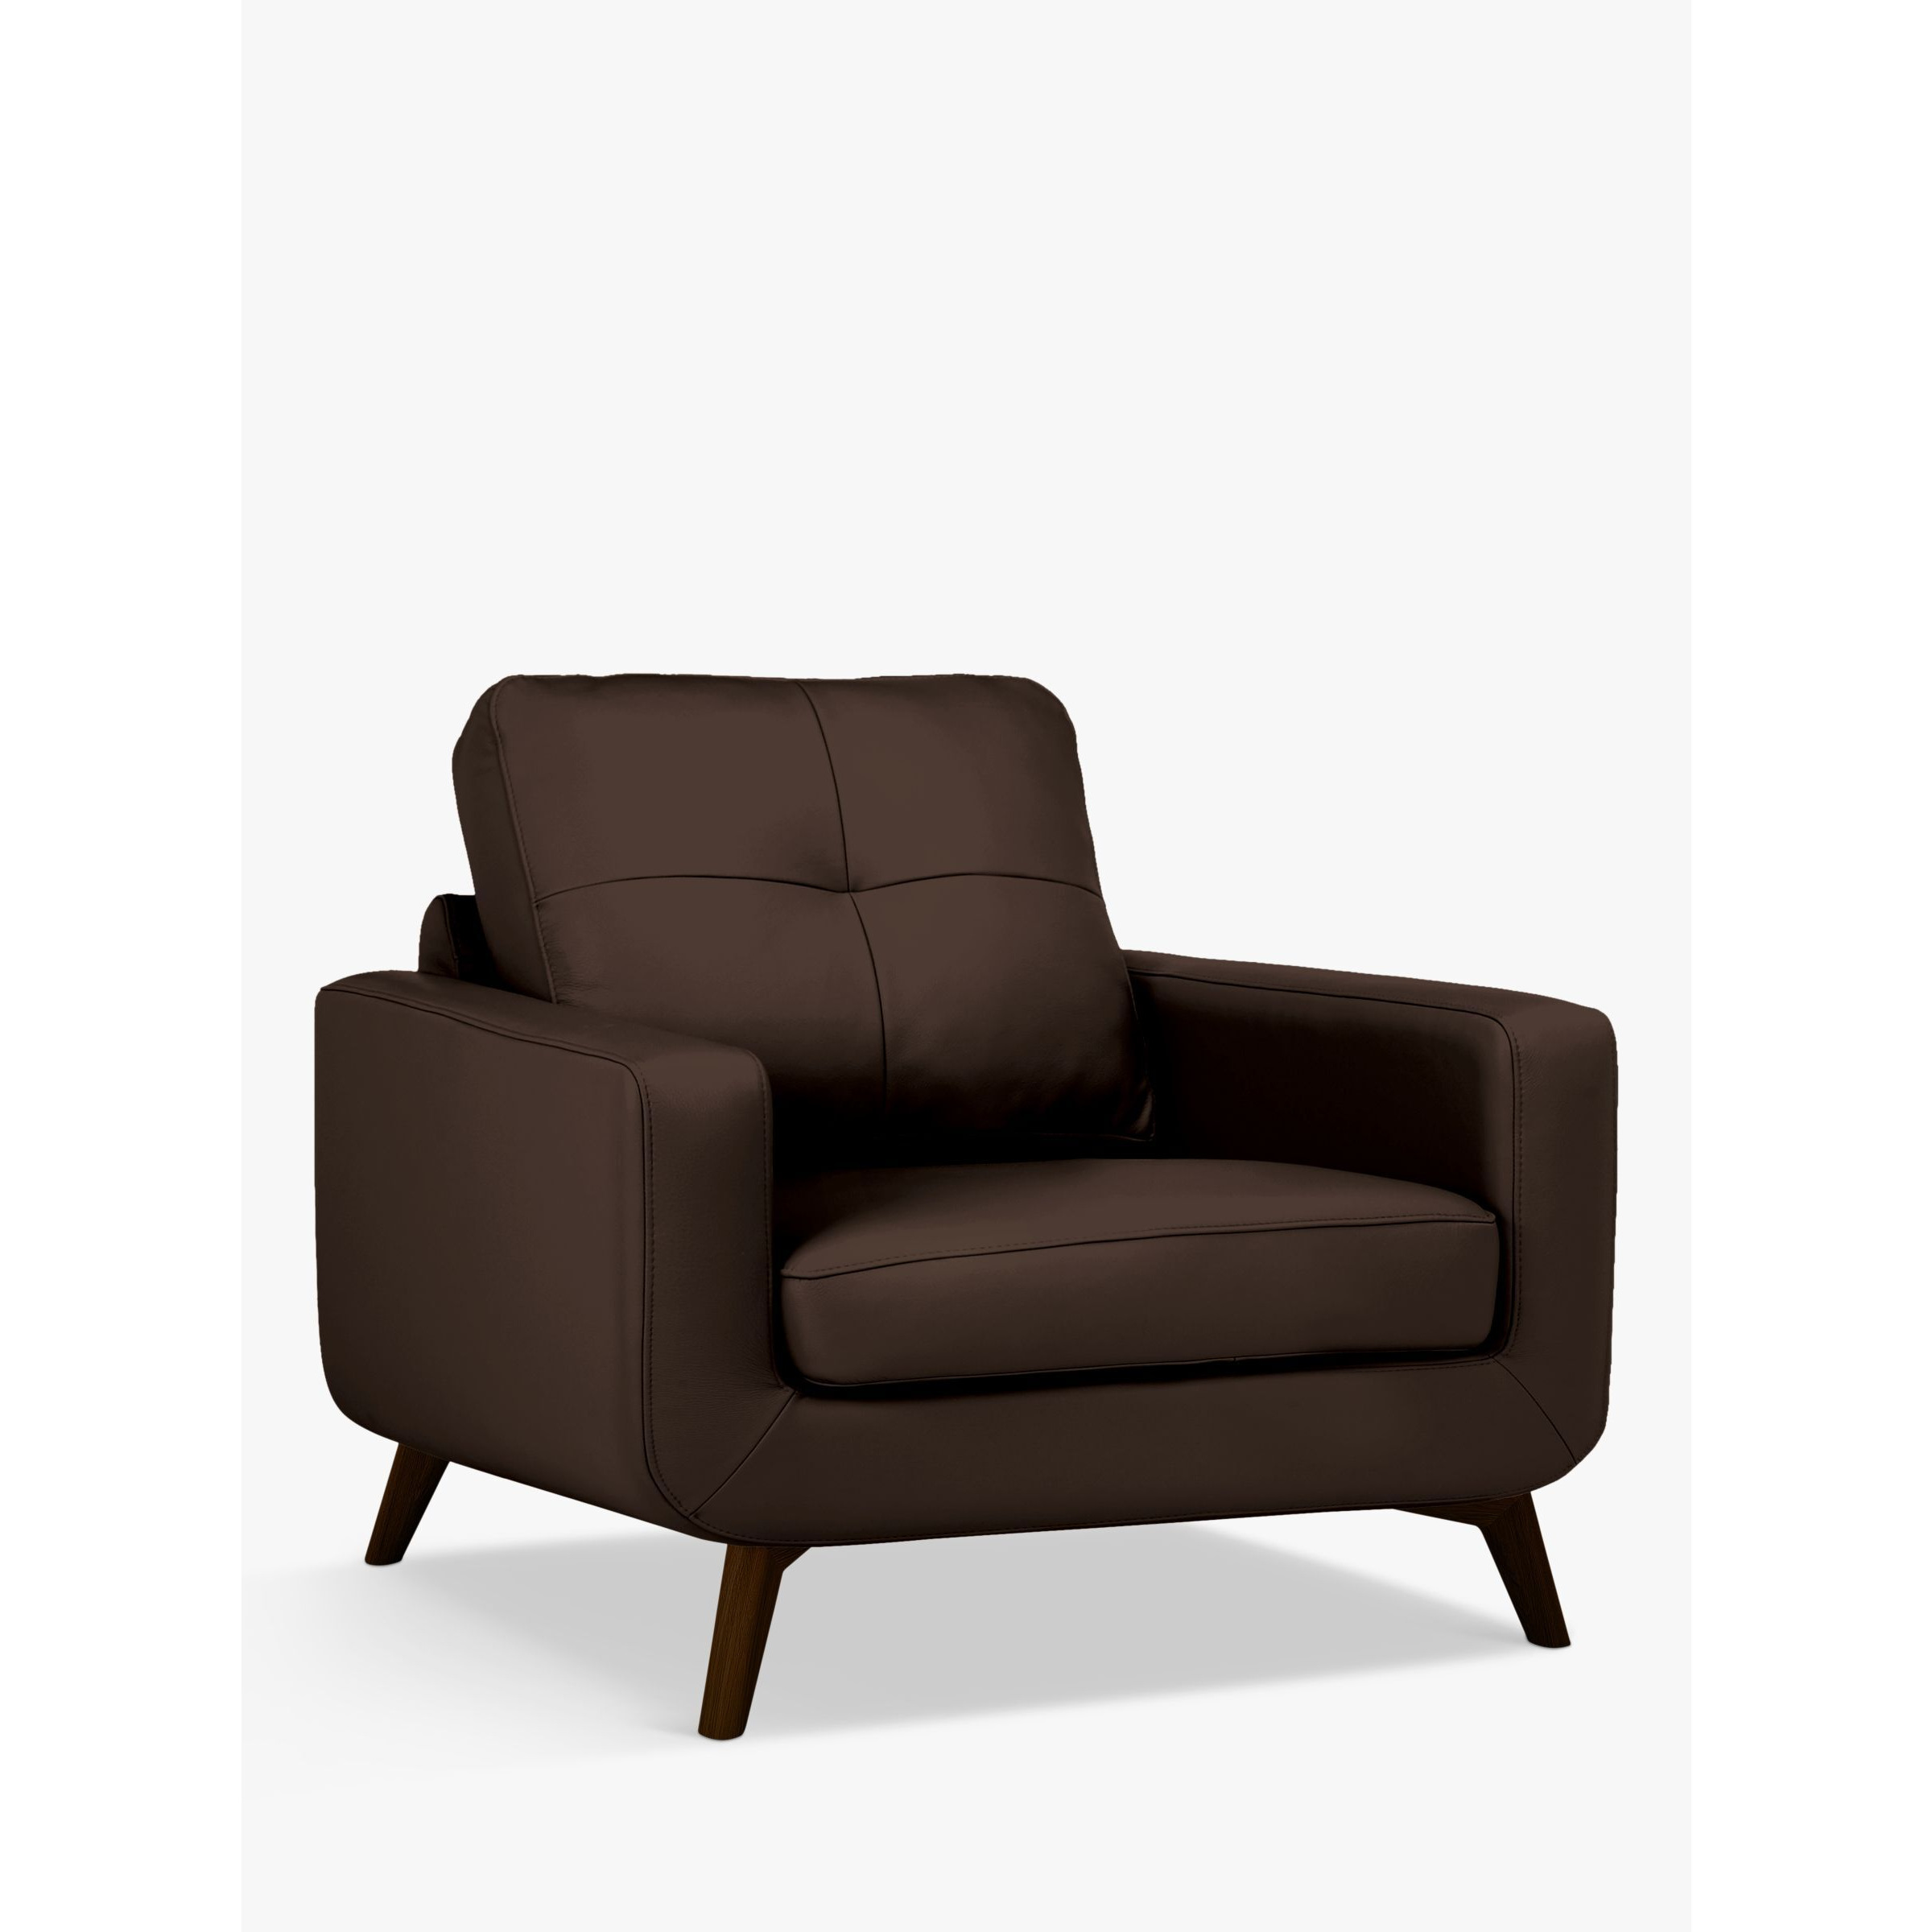 John Lewis Barbican Leather Armchair, Dark Leg - image 1